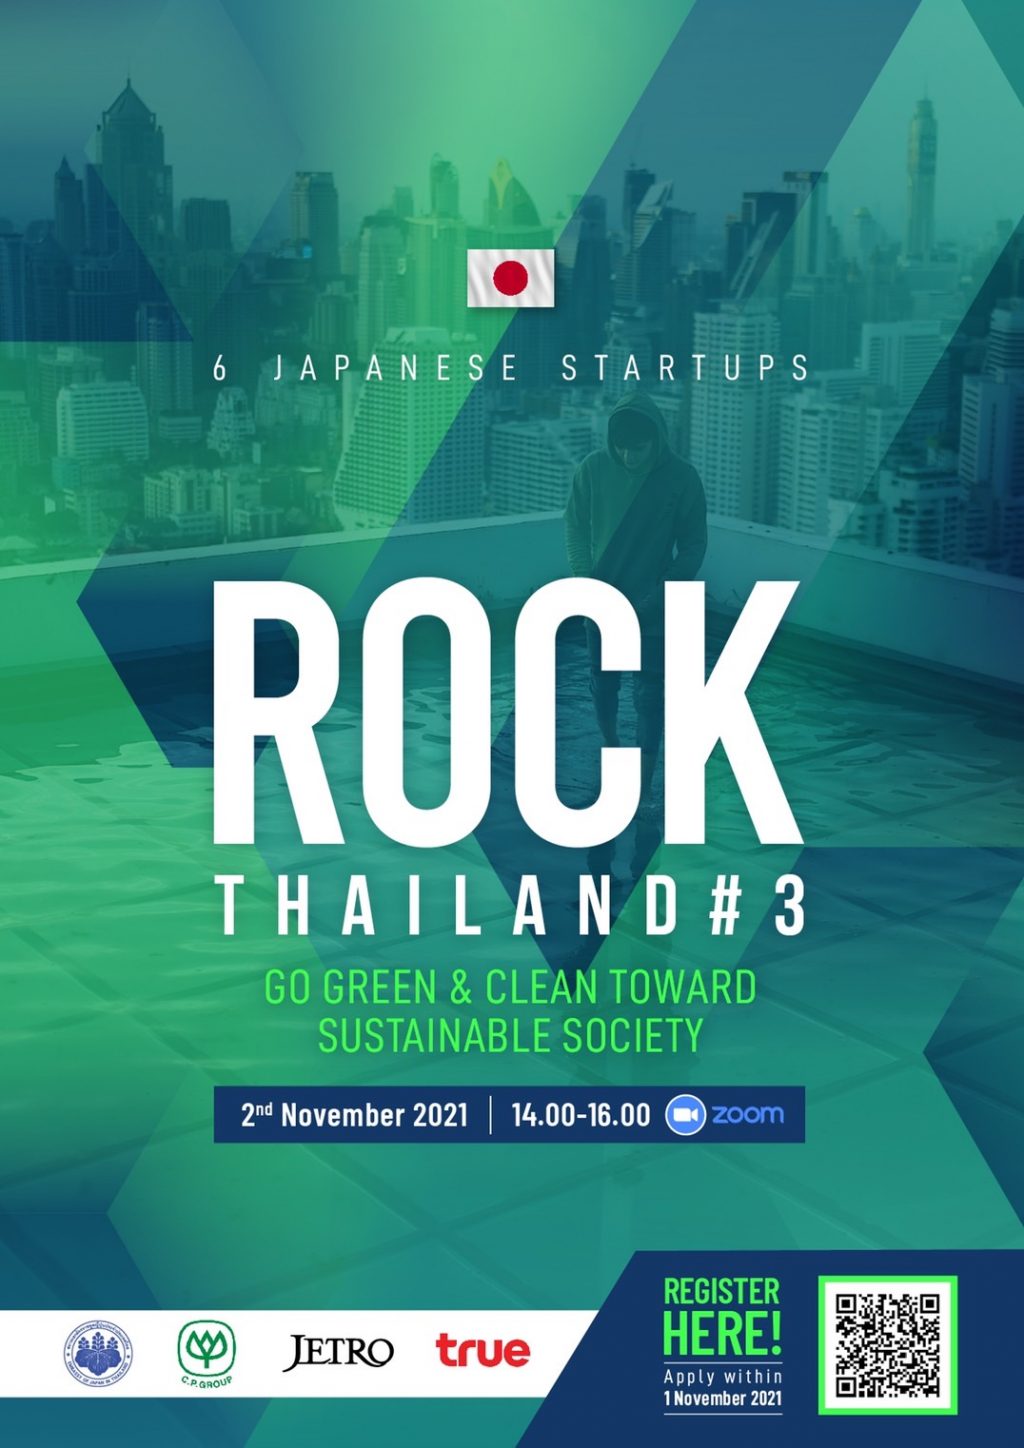 "Rock Thailand #3, Go Green & Clean toward Sustainable Society